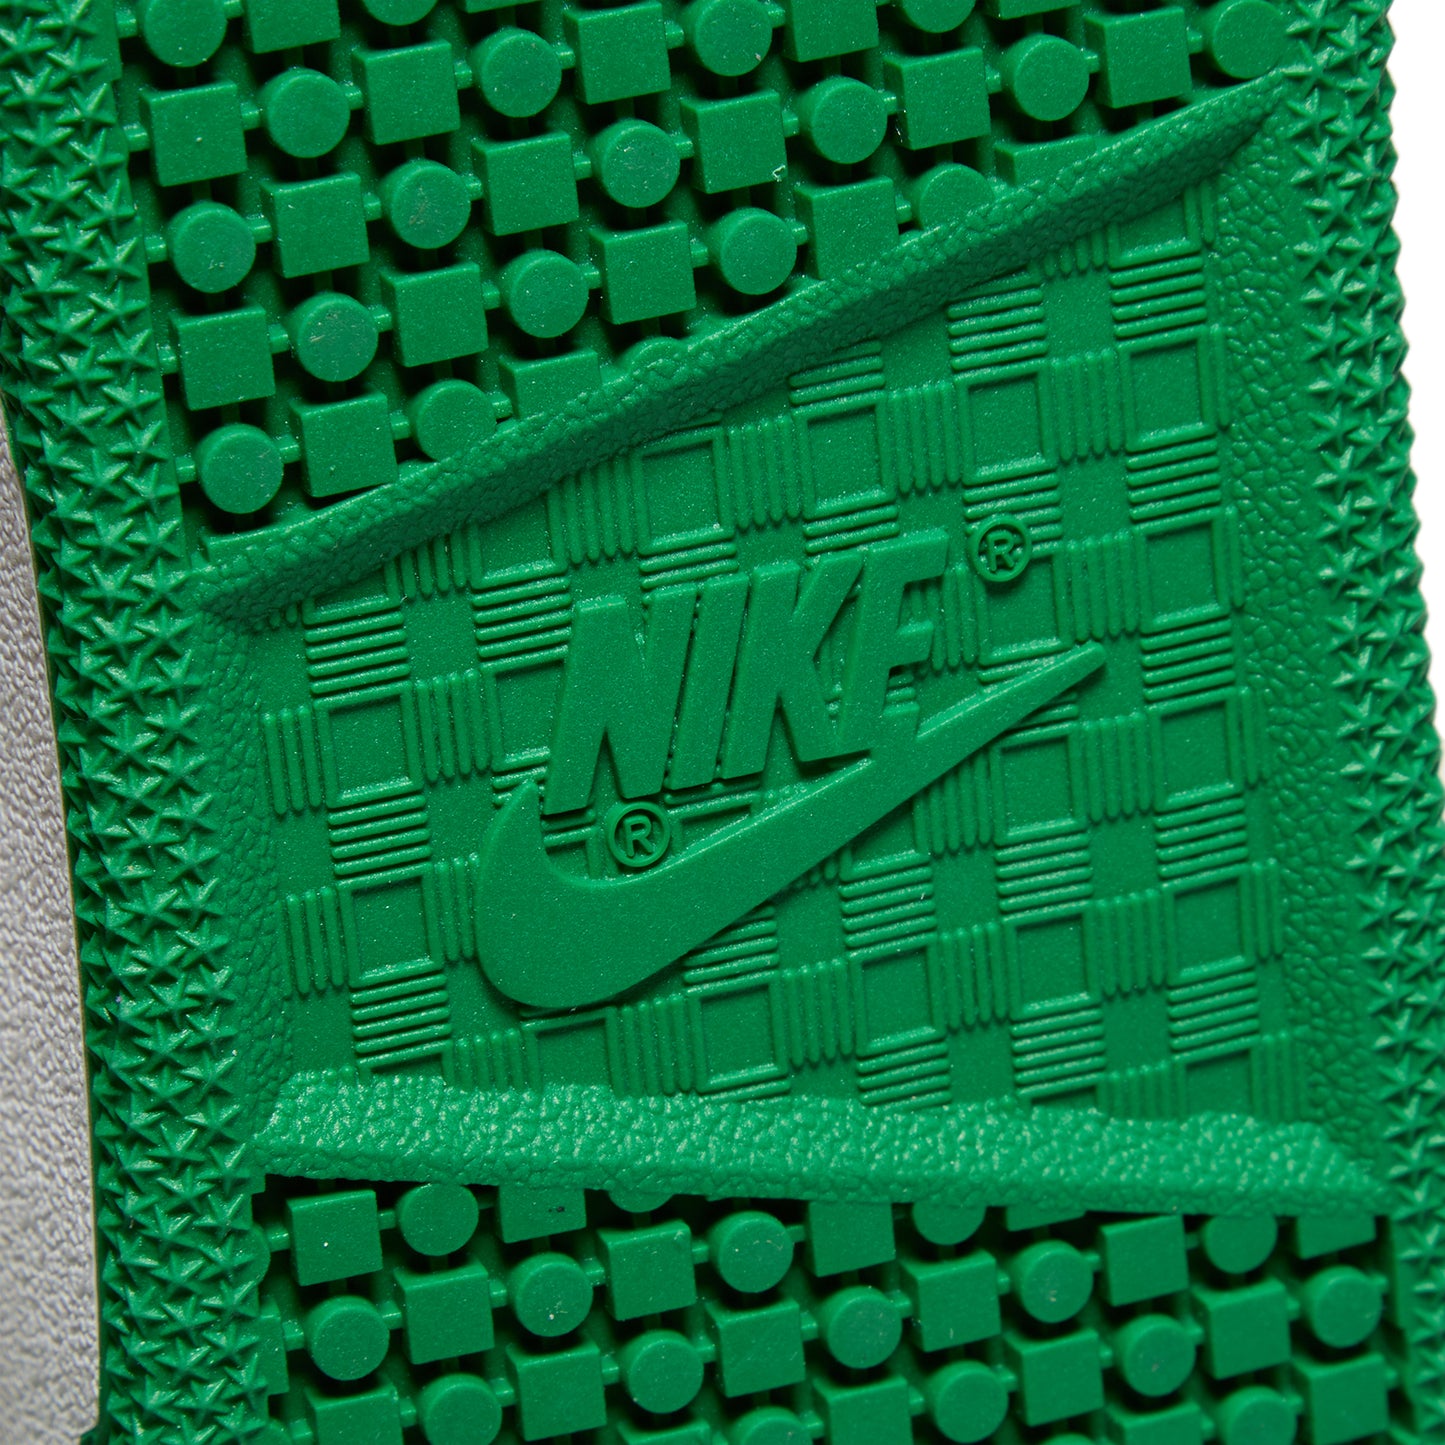 Nike Mac Attack (White/Hyper Grape/Court Green)